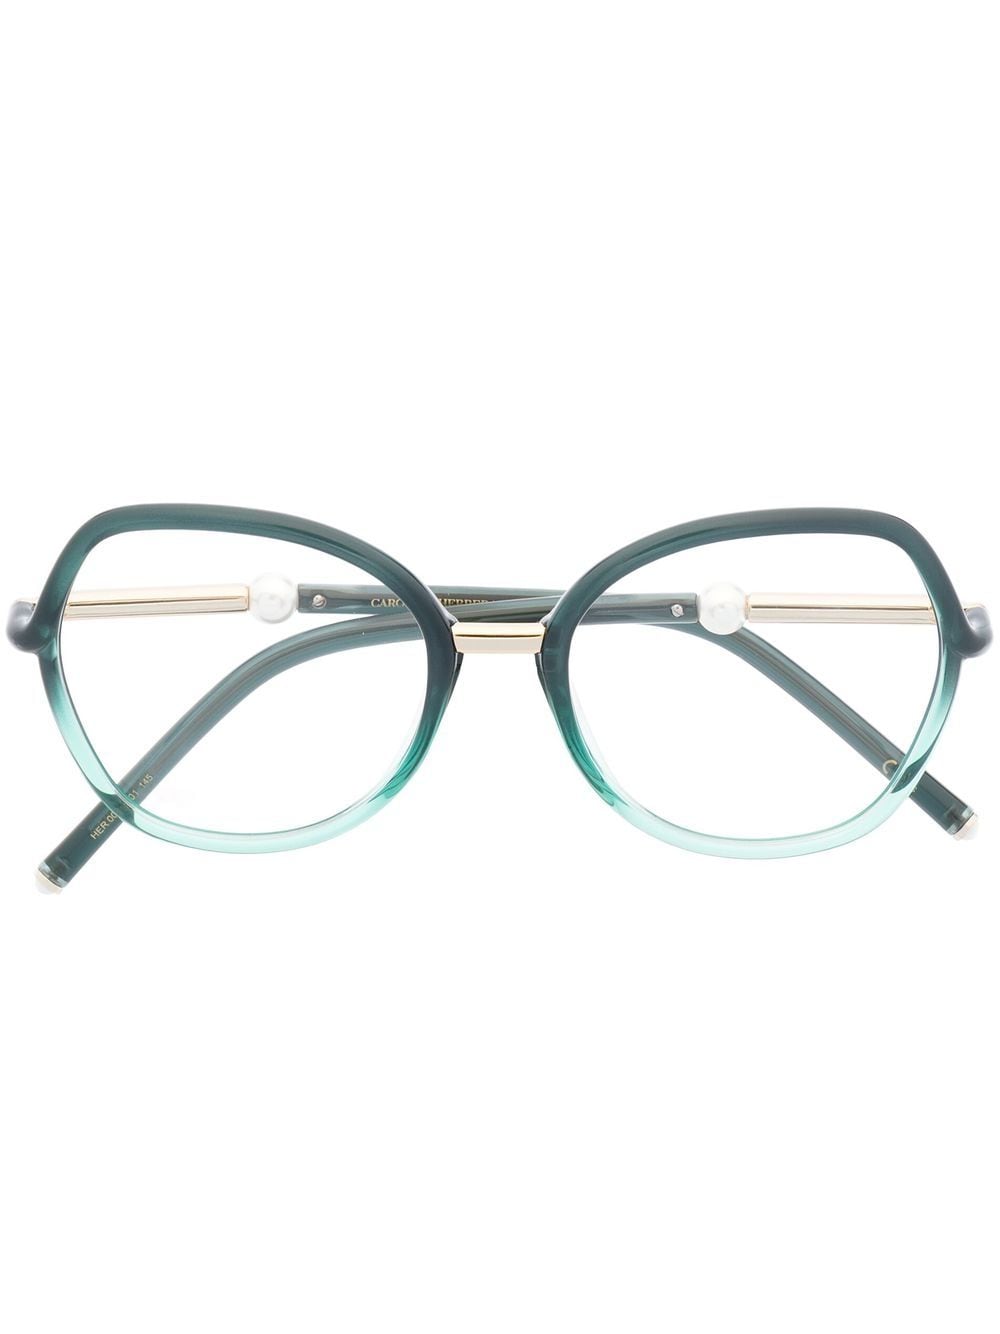 Carolina Herrera HER 0080 C53 601 Oversized Glasses - Farfetch